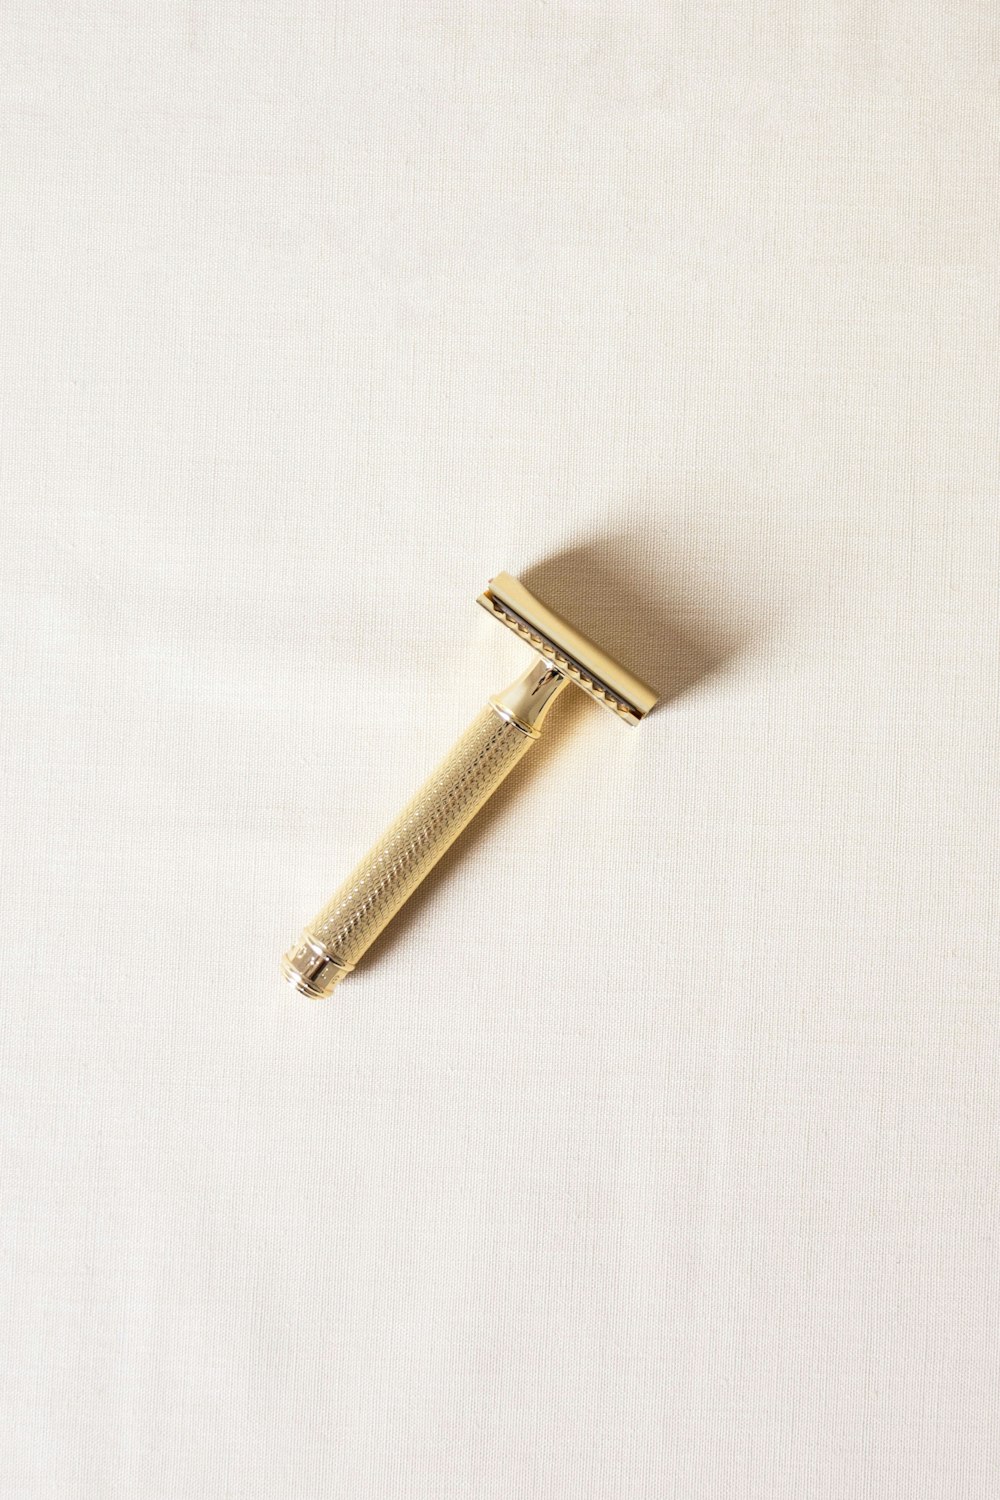 afeitadora de color dorado sobre superficie blanca